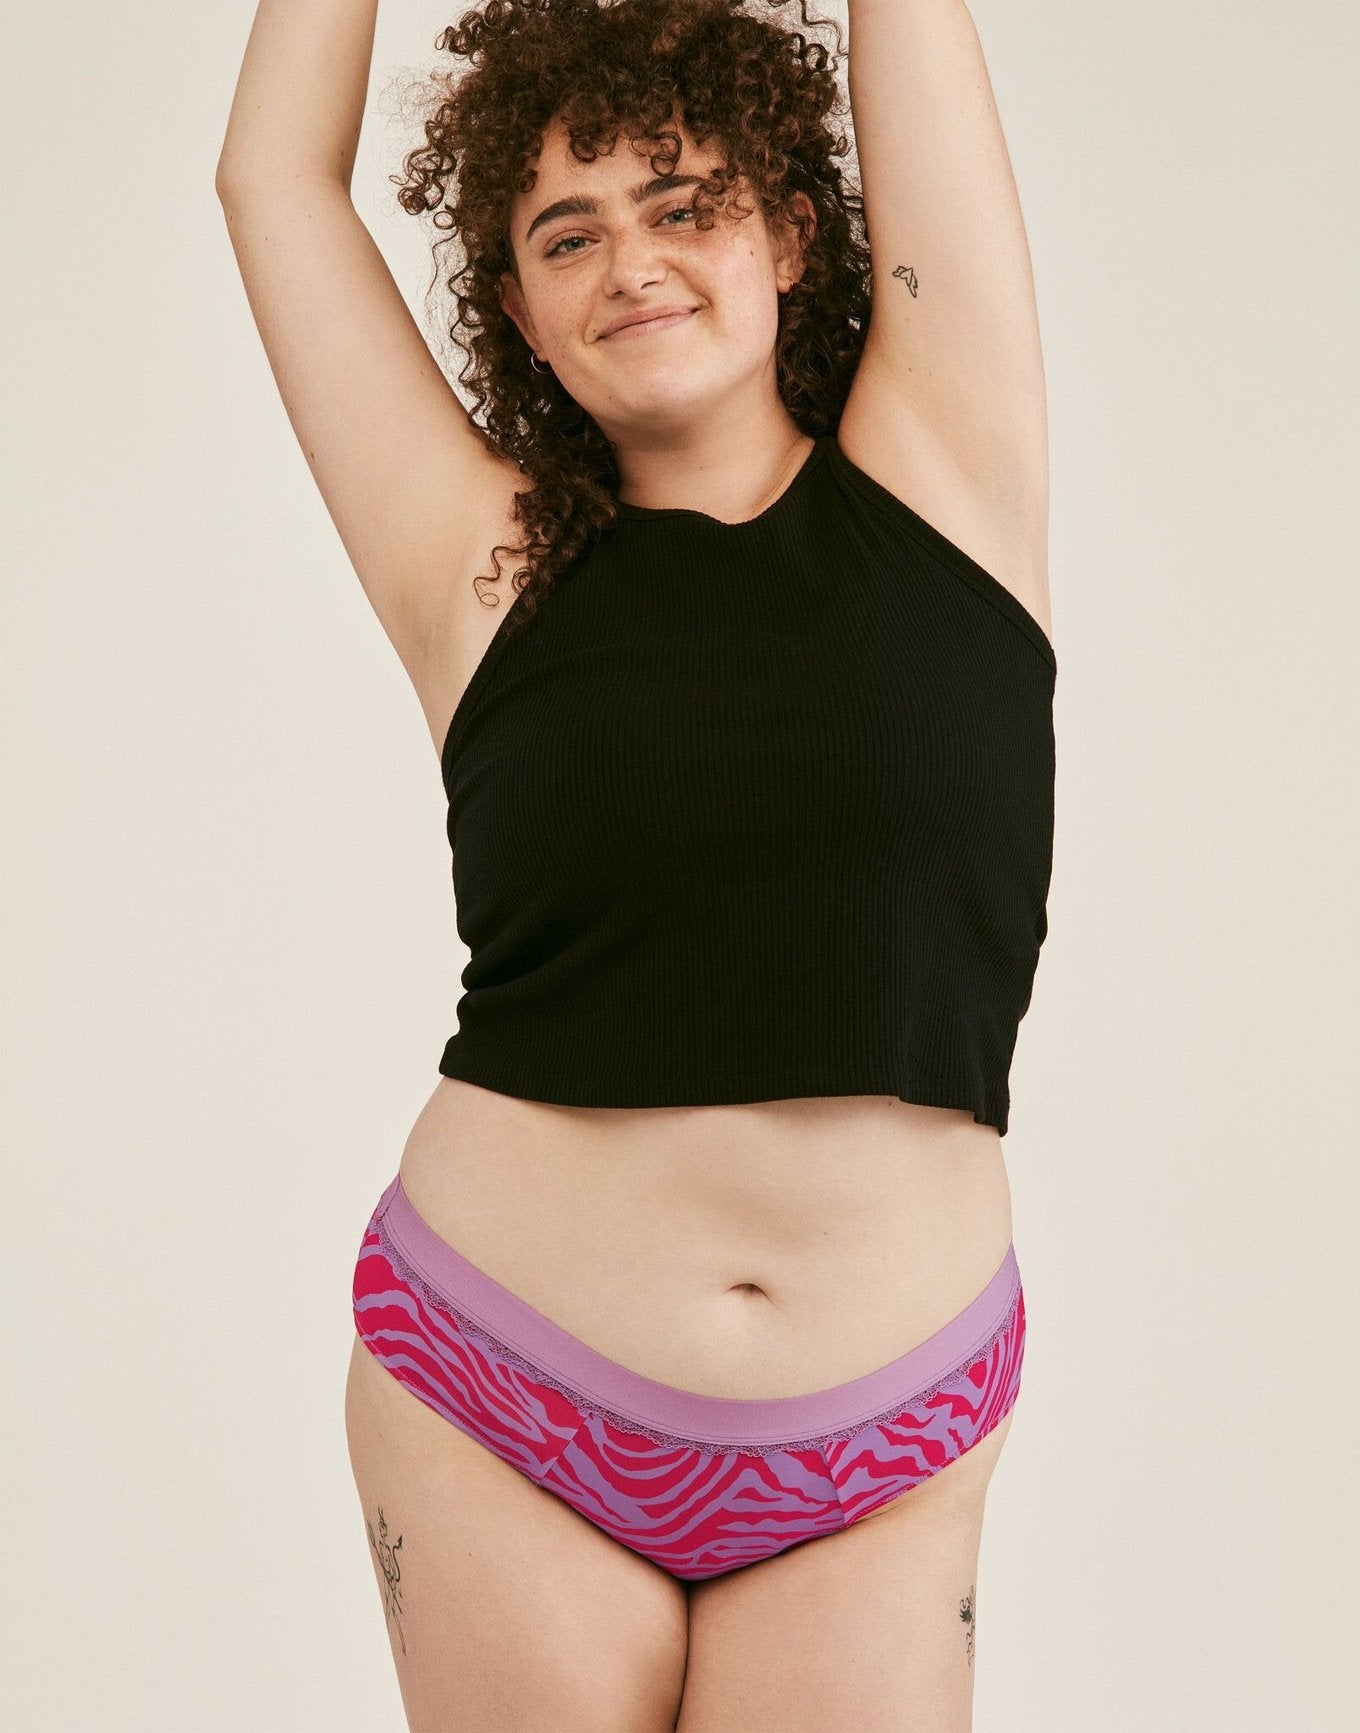 Joyja Cindy period-proof panty in color Secret Safari C02 and shape cheeky